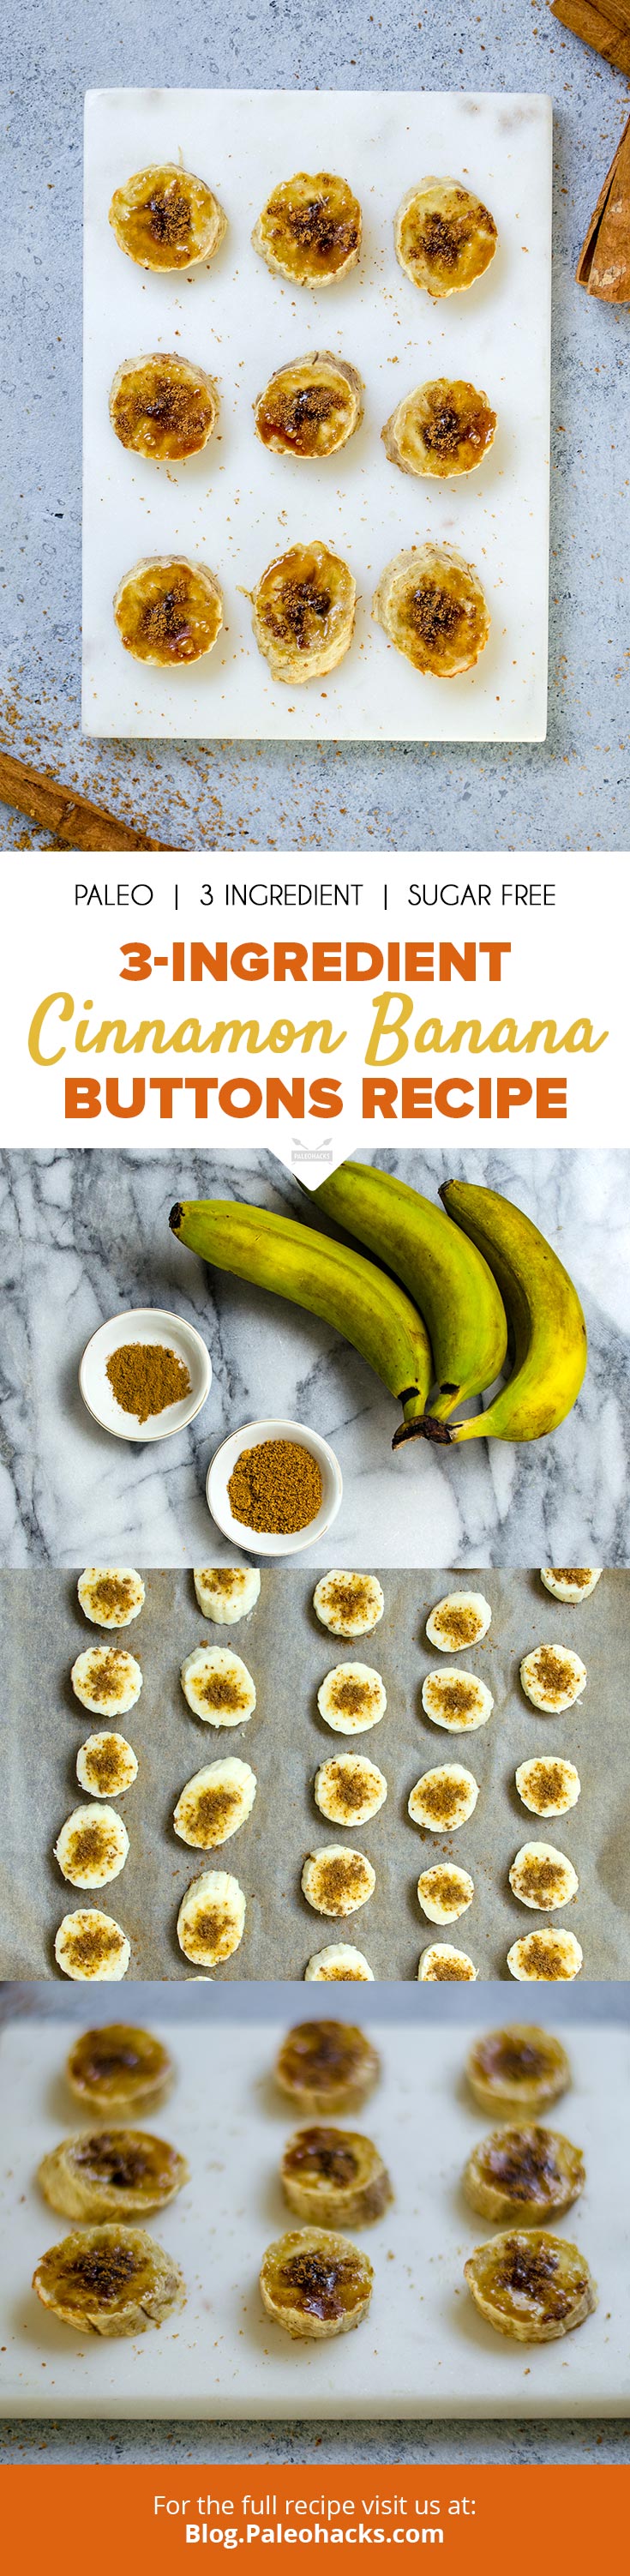 3-Ingredient Cinnamon Banana Buttons Recipe | Paleo, Sugar Free